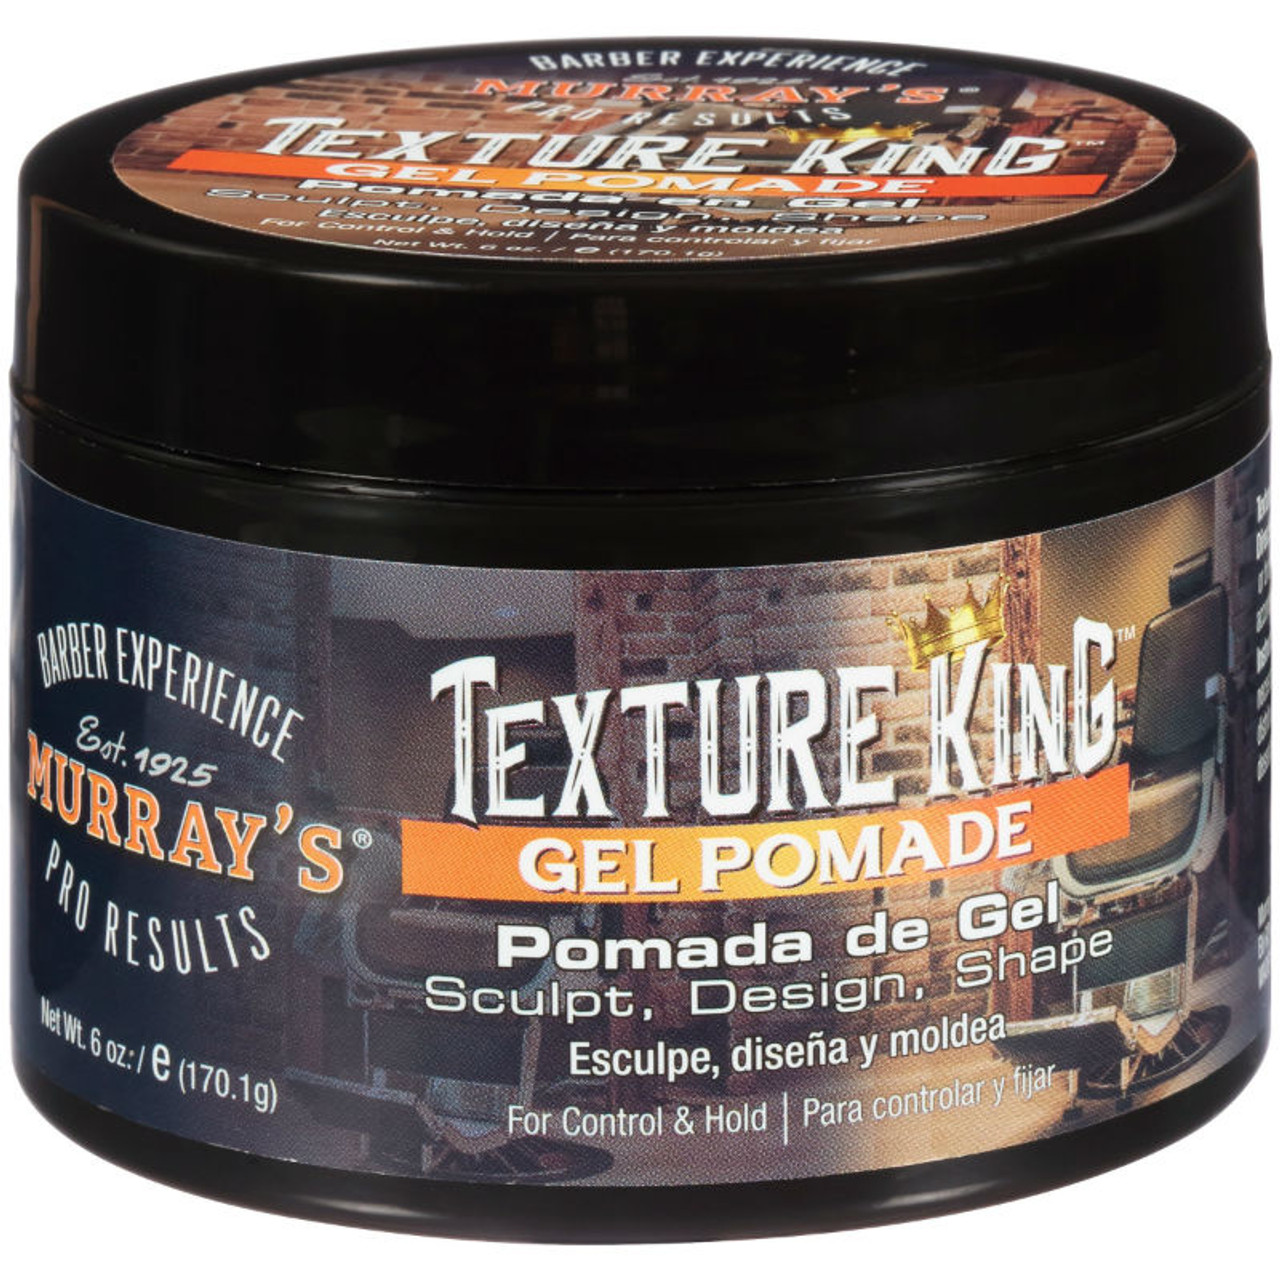 Murrays original Pomade 3oz Bulk cheaper Hair gel wax styling mud